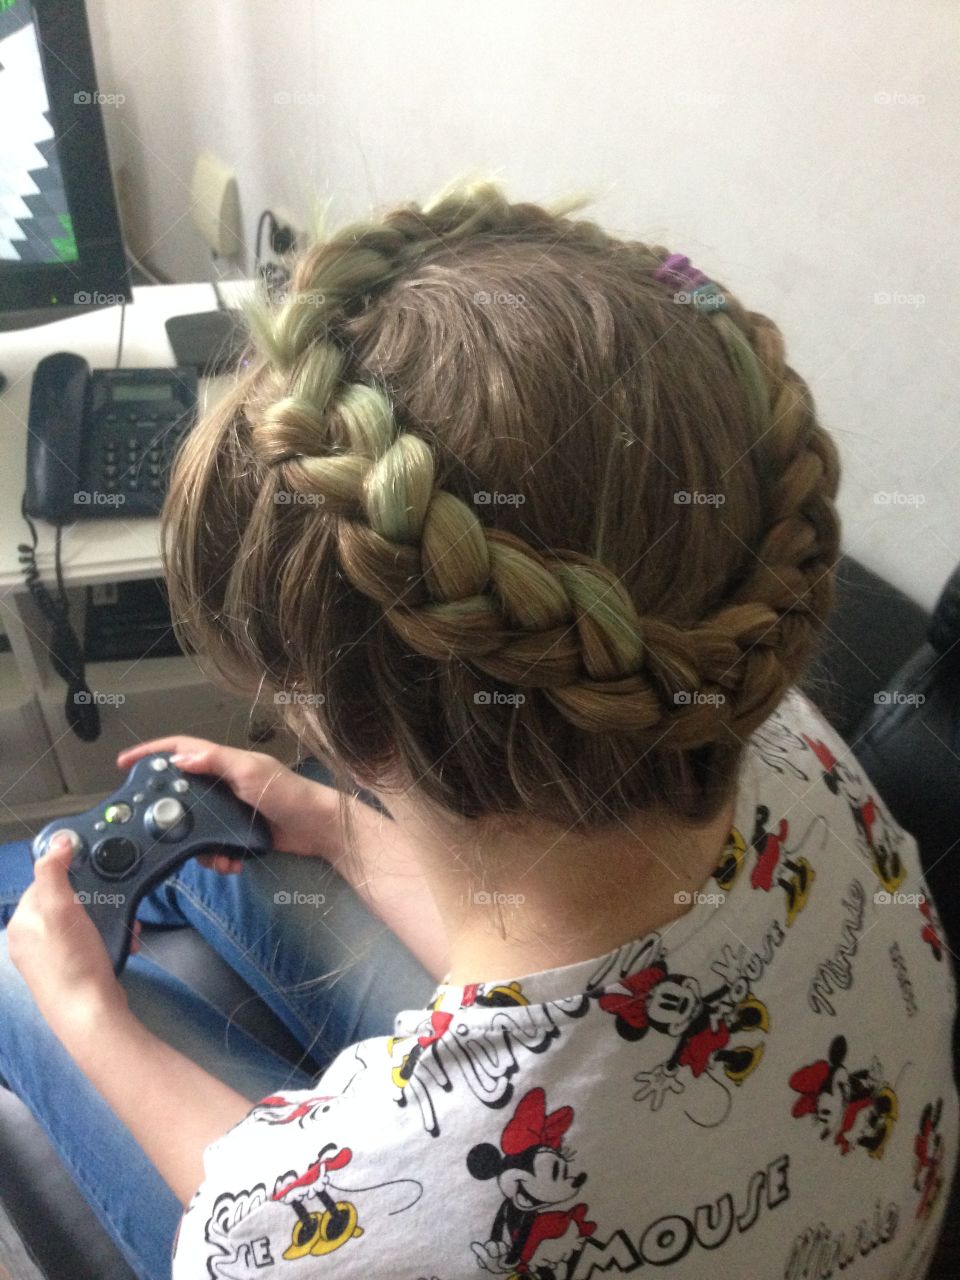 Girl with beautiful braided hair